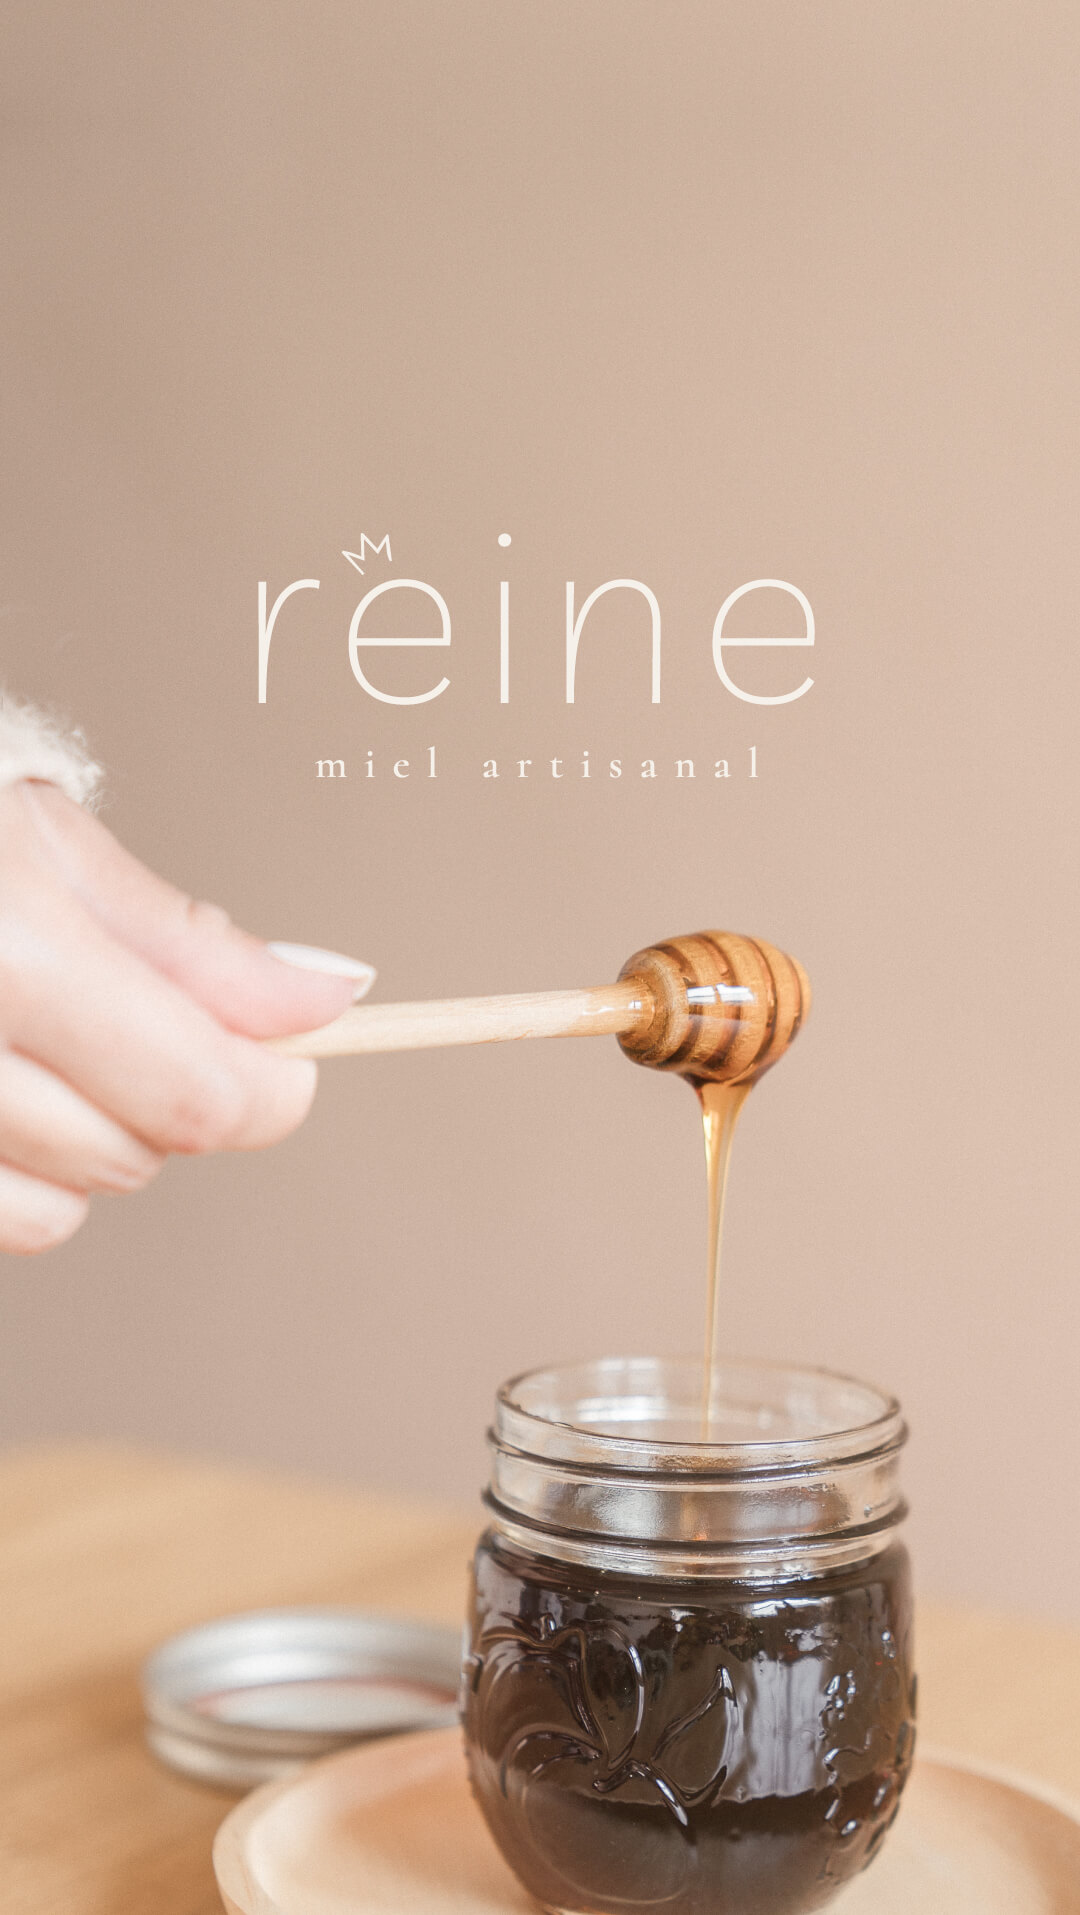 REINE – miel artisanal